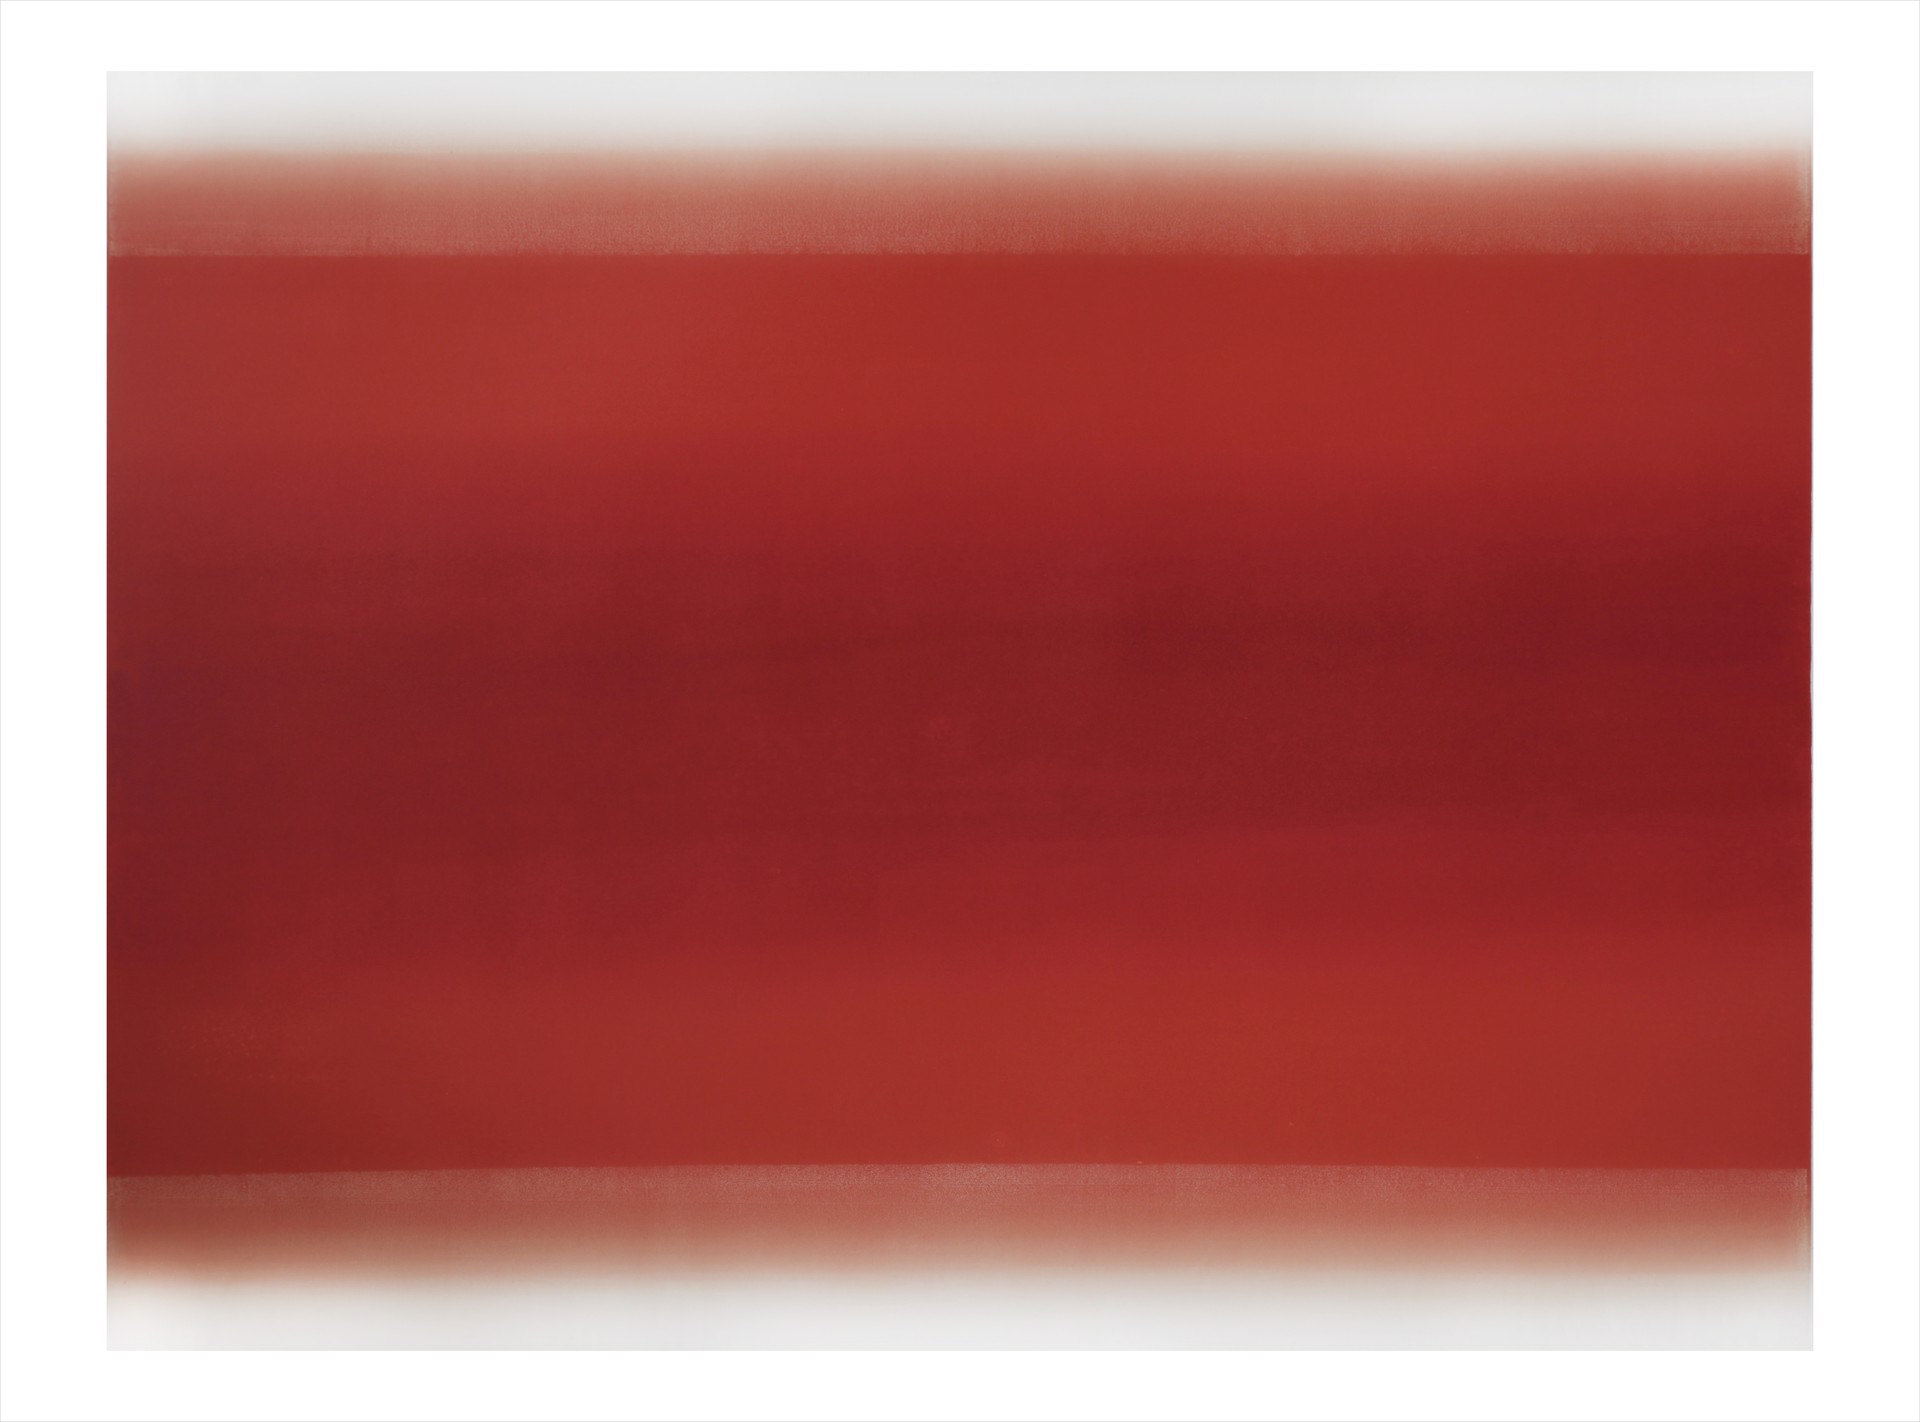 "Illumination, Red" #02-18-03 by Betty Merken